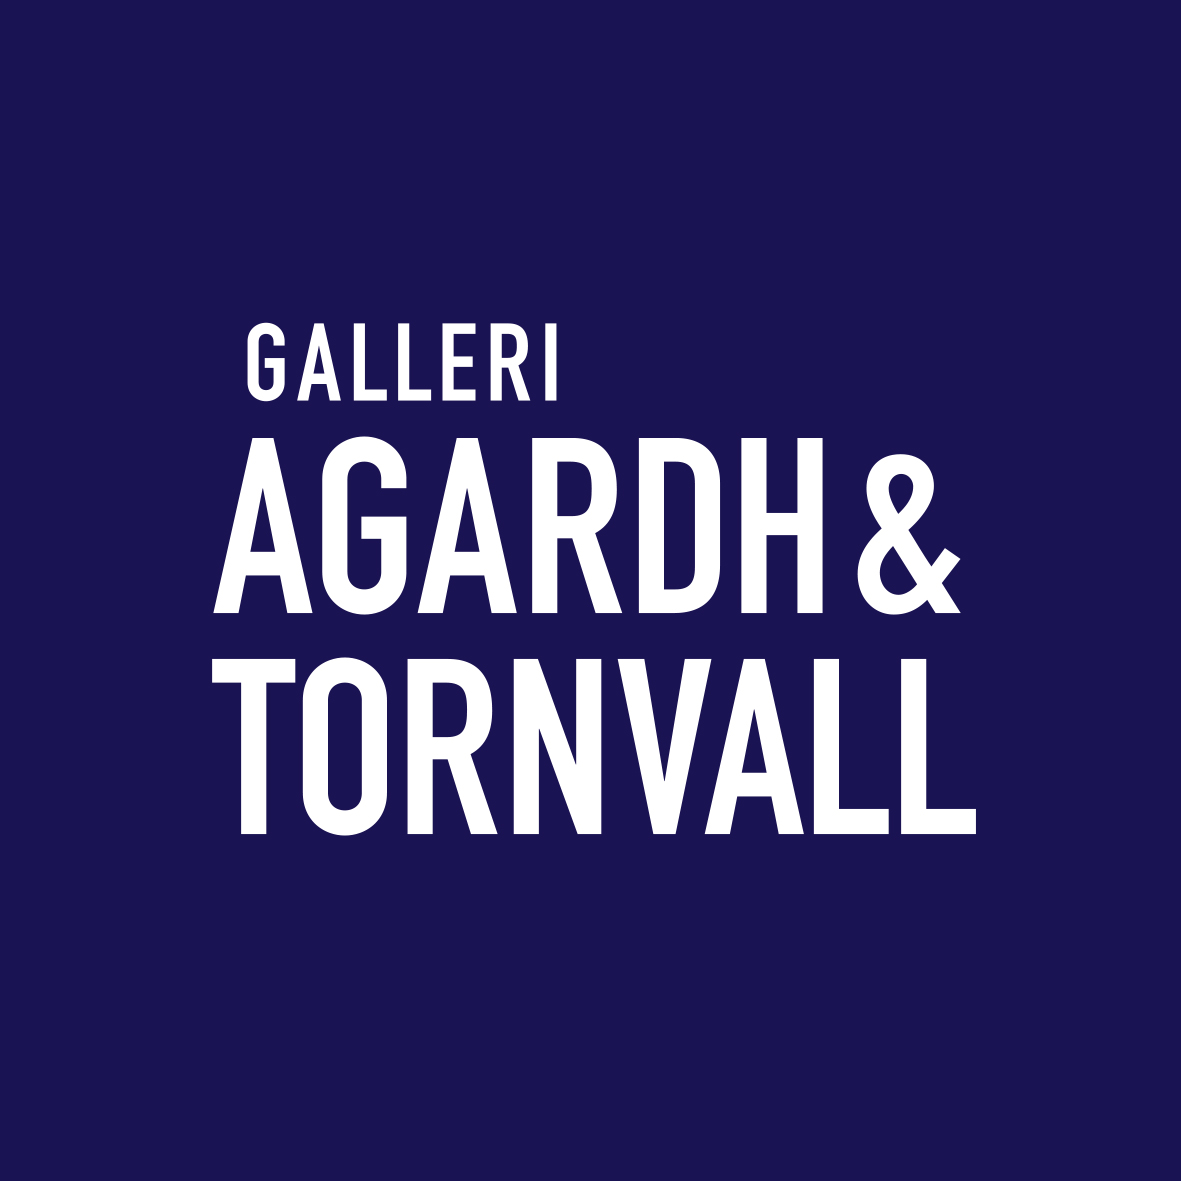 Galleri Agardh & Tornvall